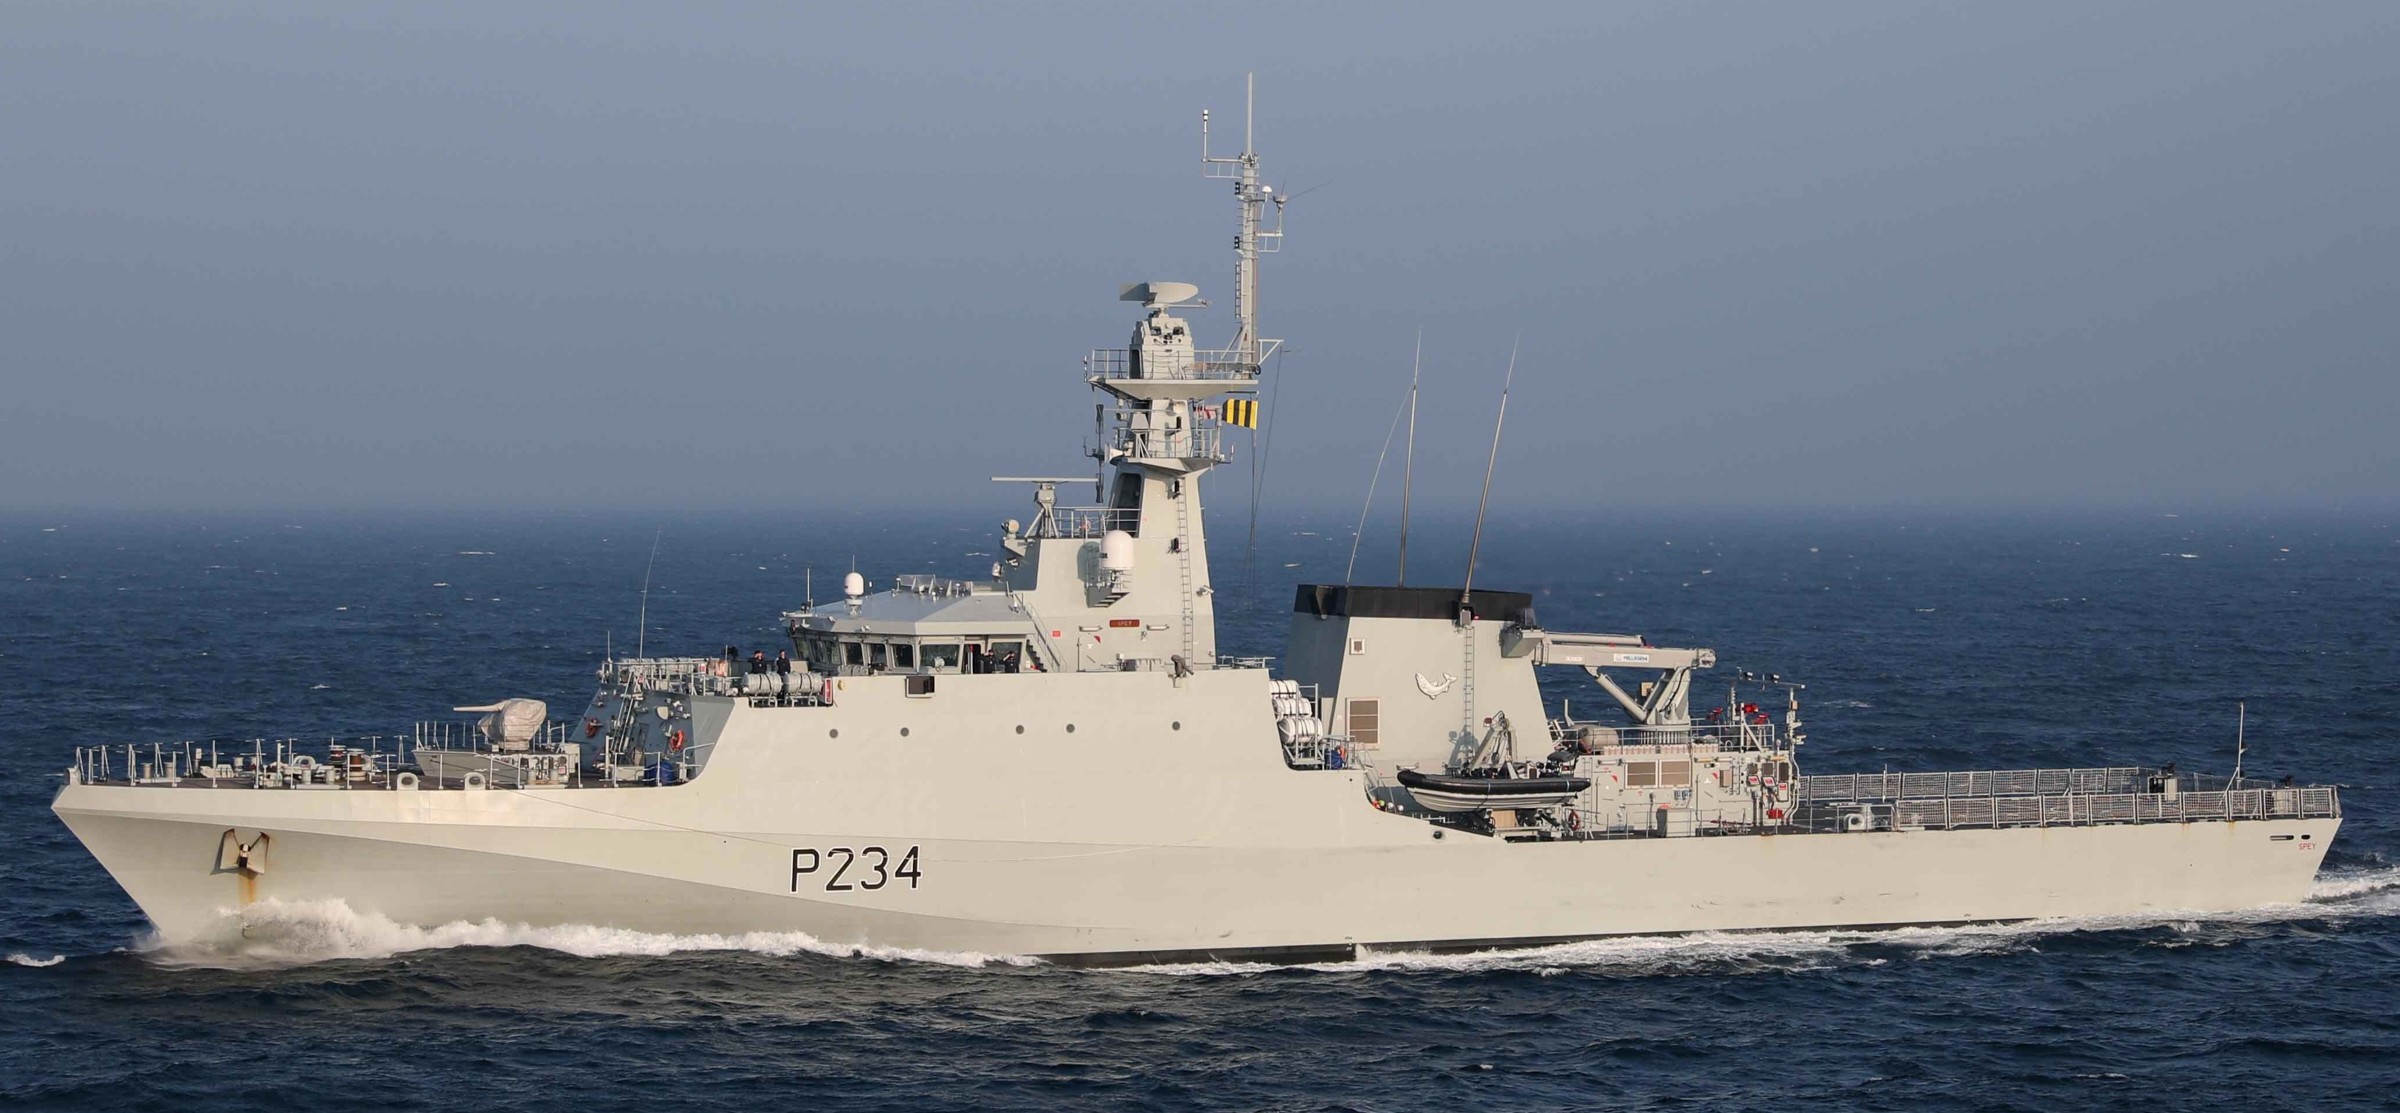 p234 hms spey river class offshore patrol vessel opv royal navy 17